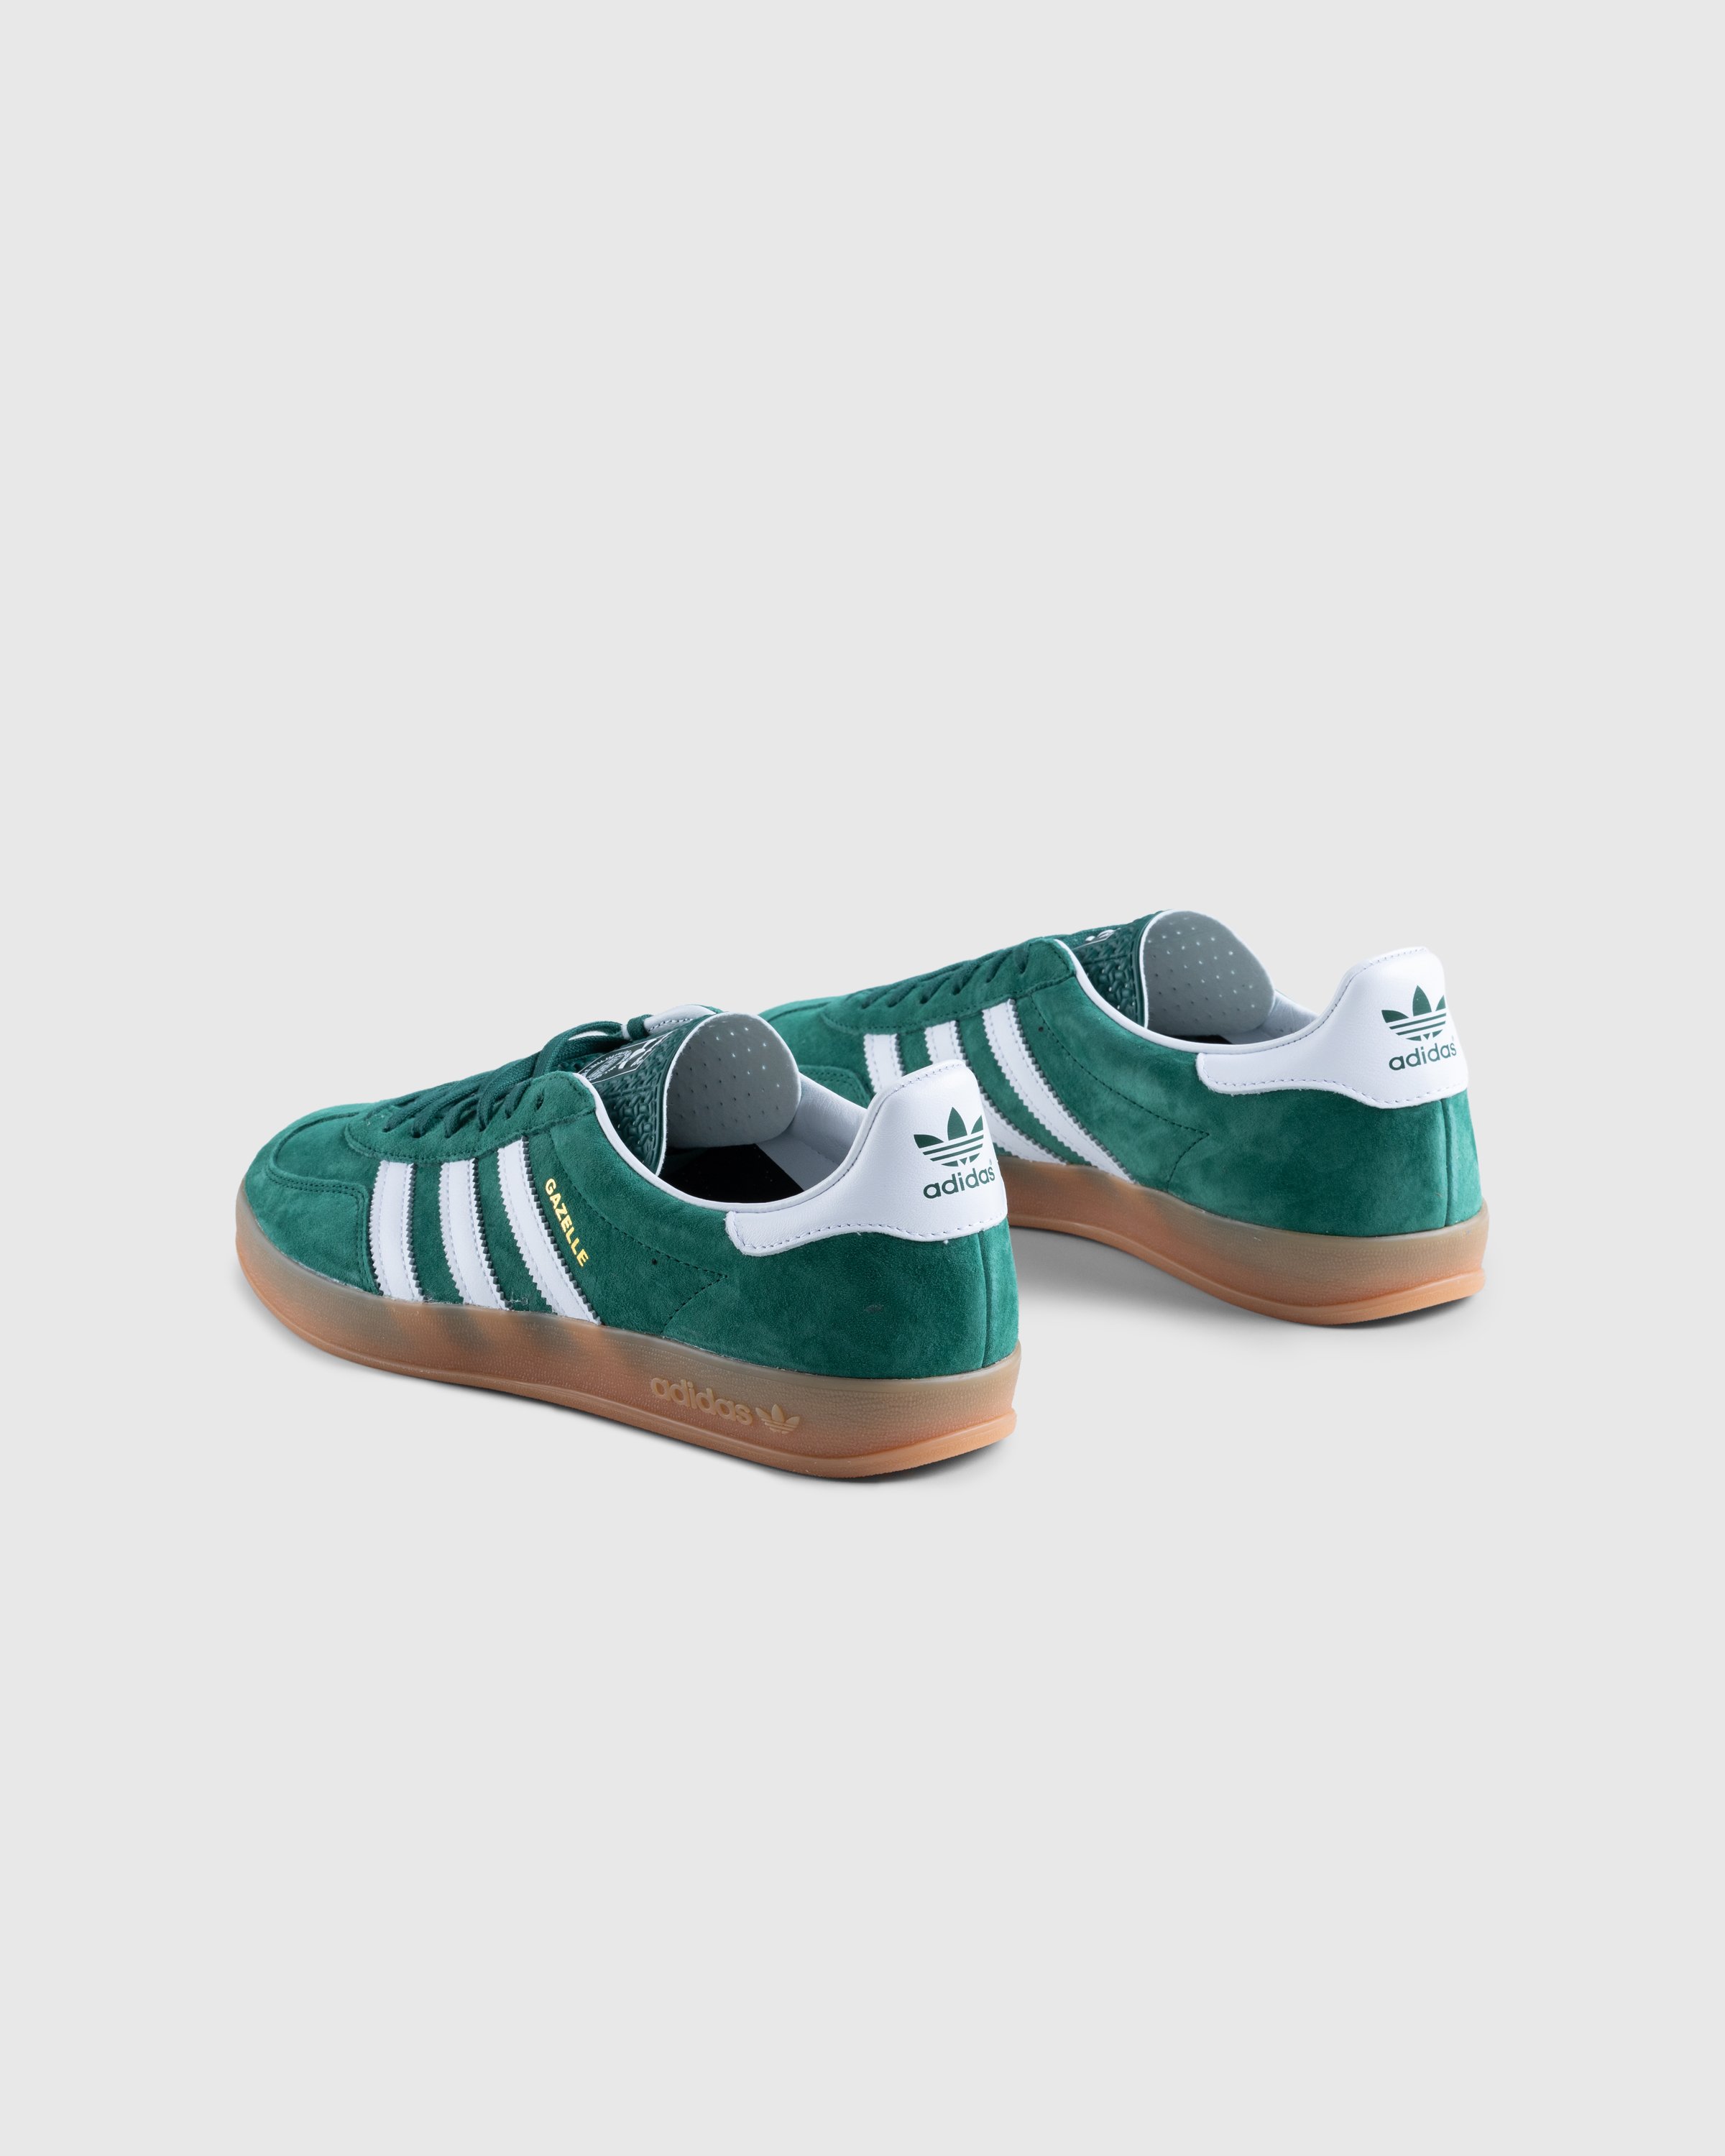 Adidas - Gazelle Indoor Collegiate Green - Footwear - Green - Image 4